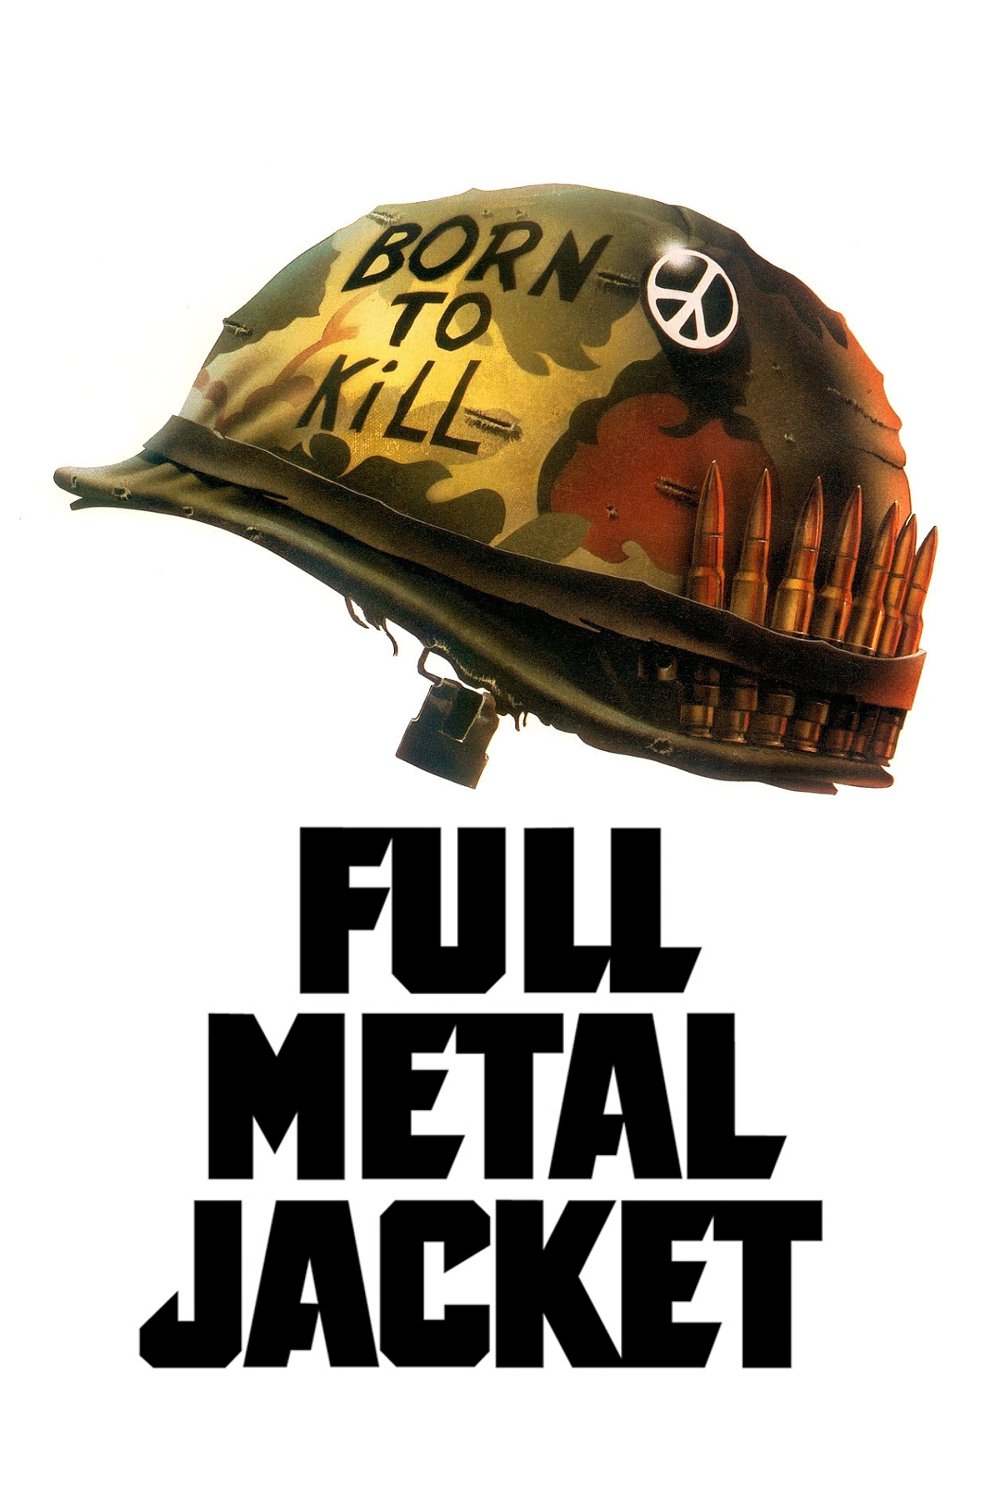 Plakat von "Full Metal Jacket"